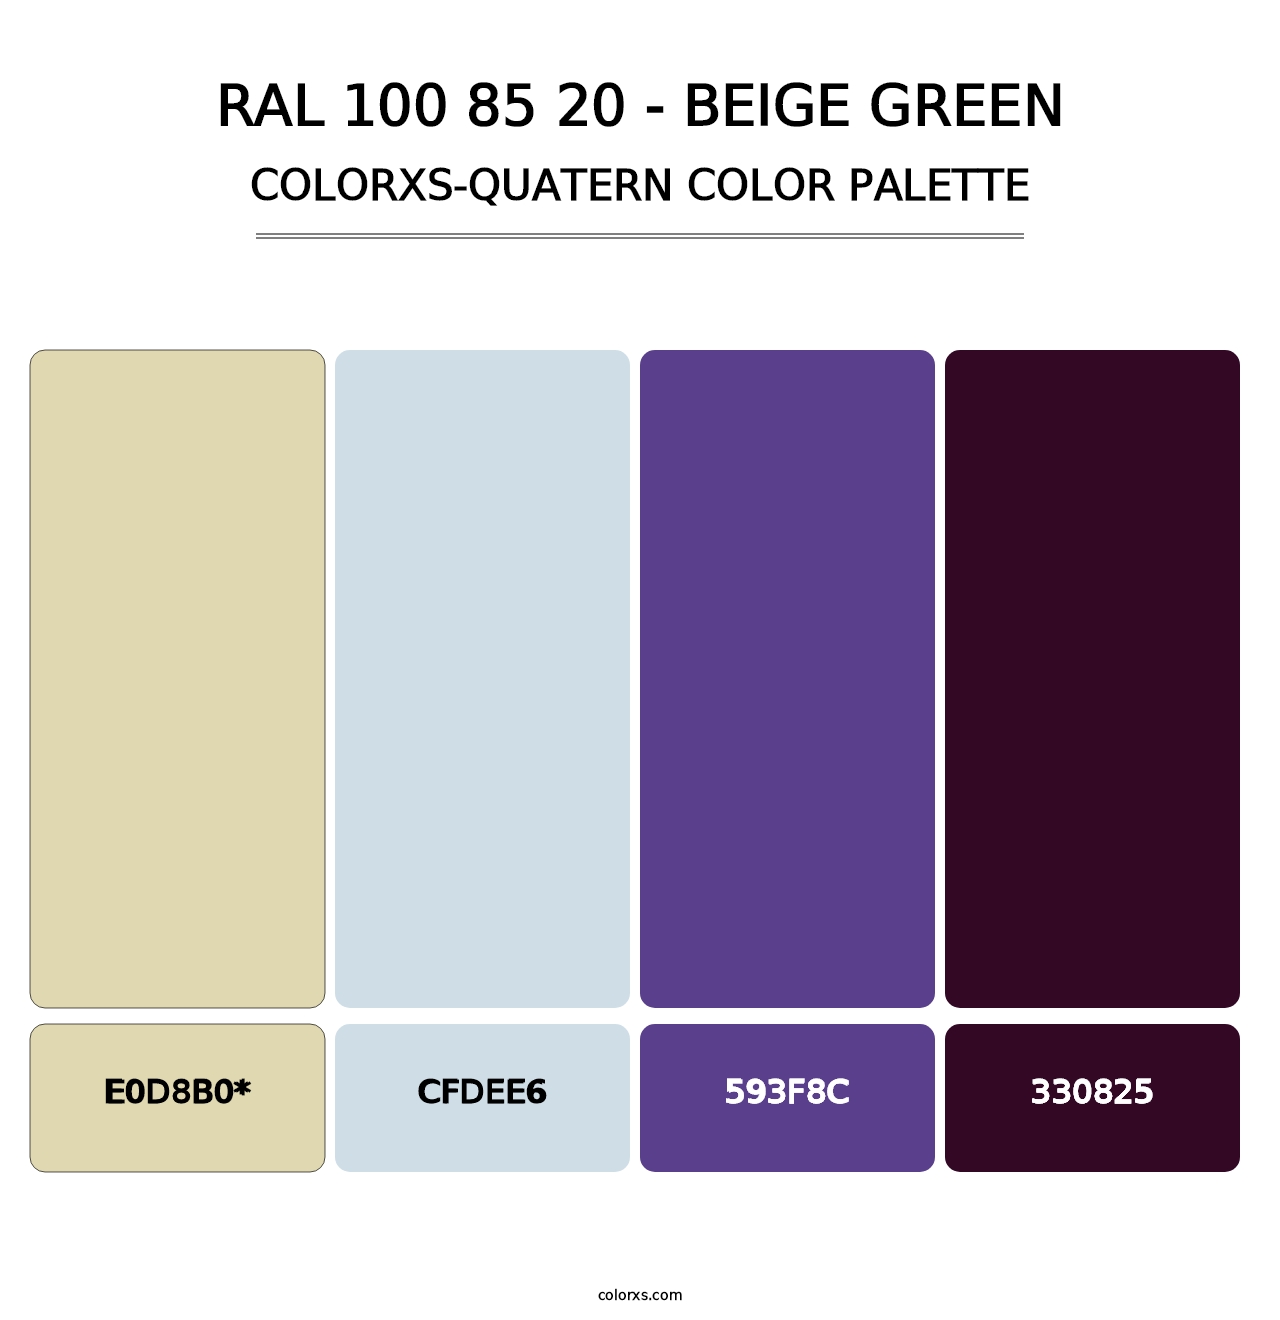 RAL 100 85 20 - Beige Green - Colorxs Quatern Palette